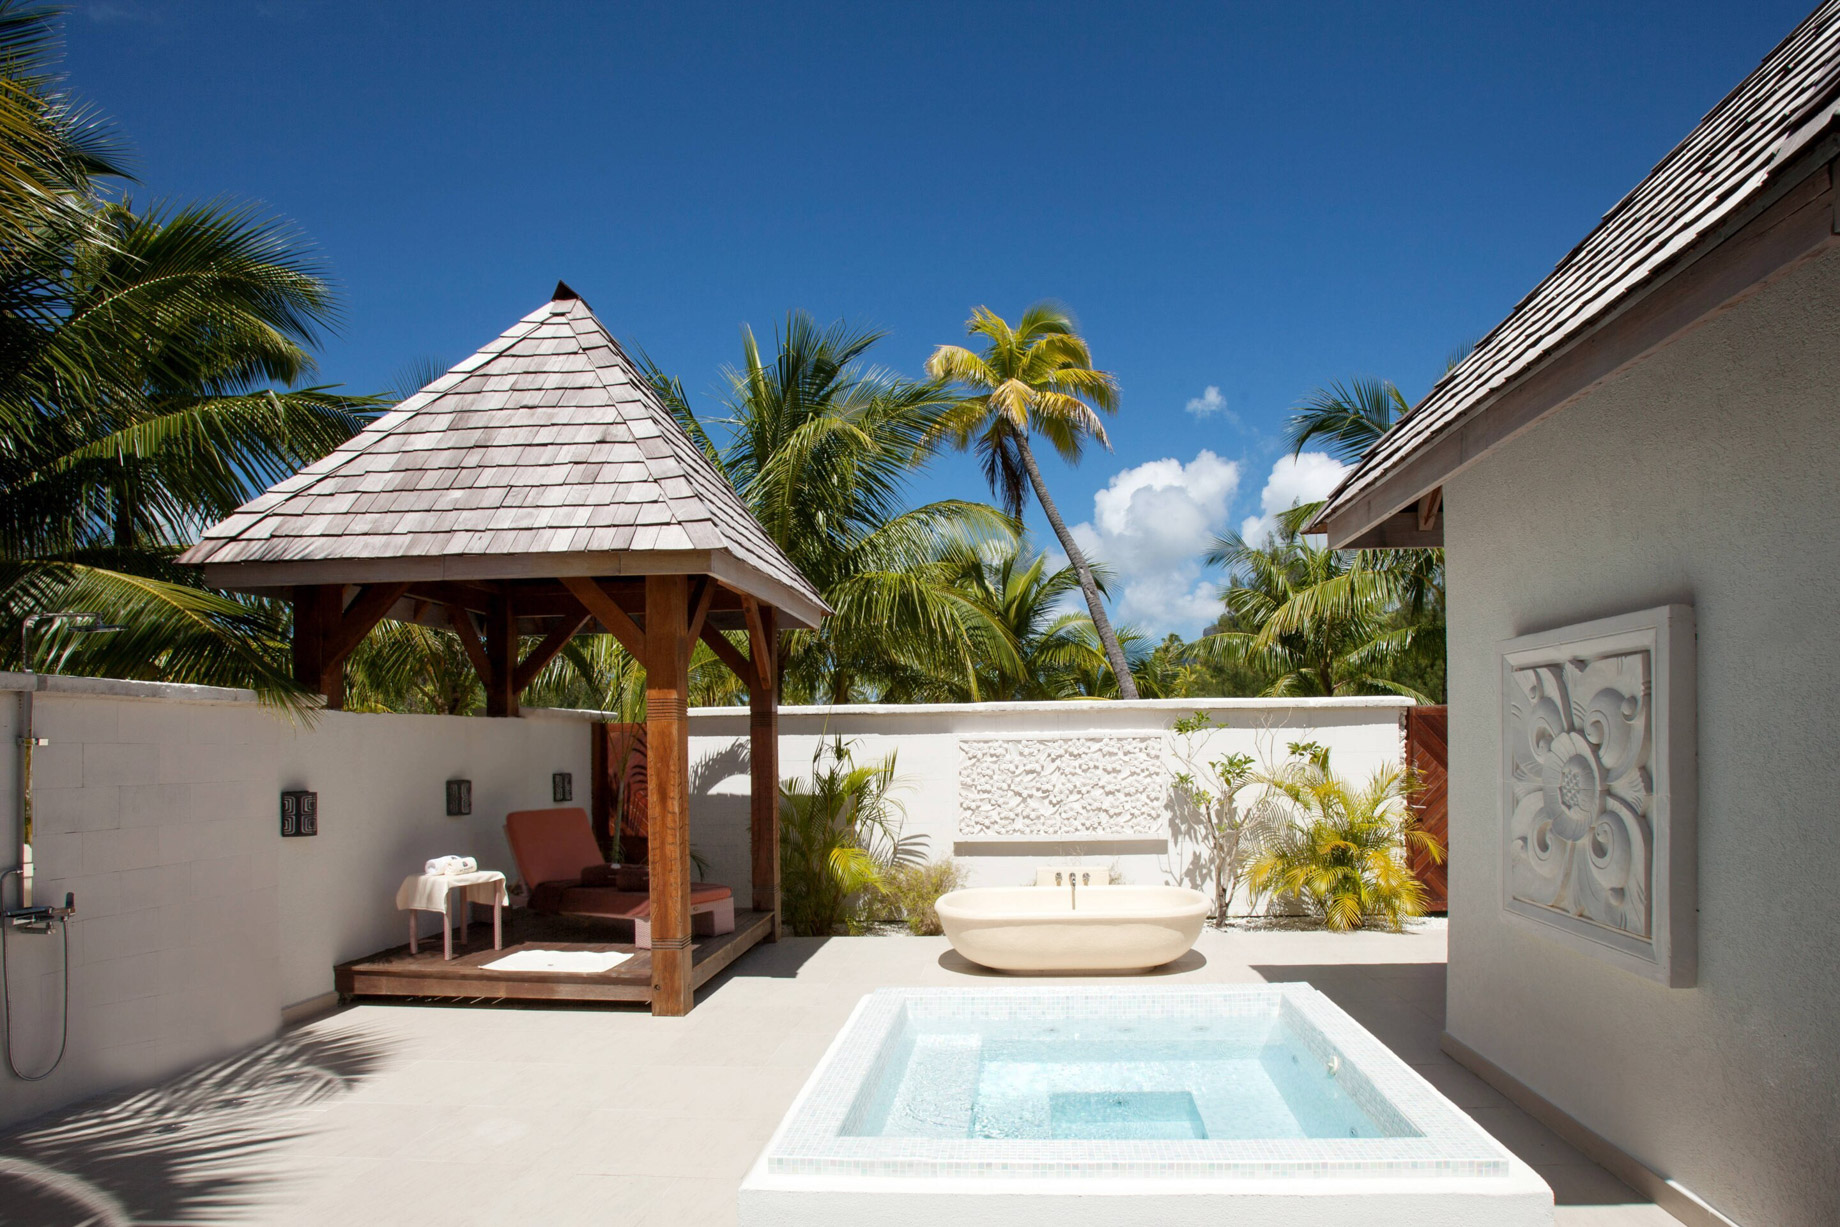 The St. Regis Bora Bora Resort – Bora Bora, French Polynesia – Iridium Spa Exterior Treatment Area